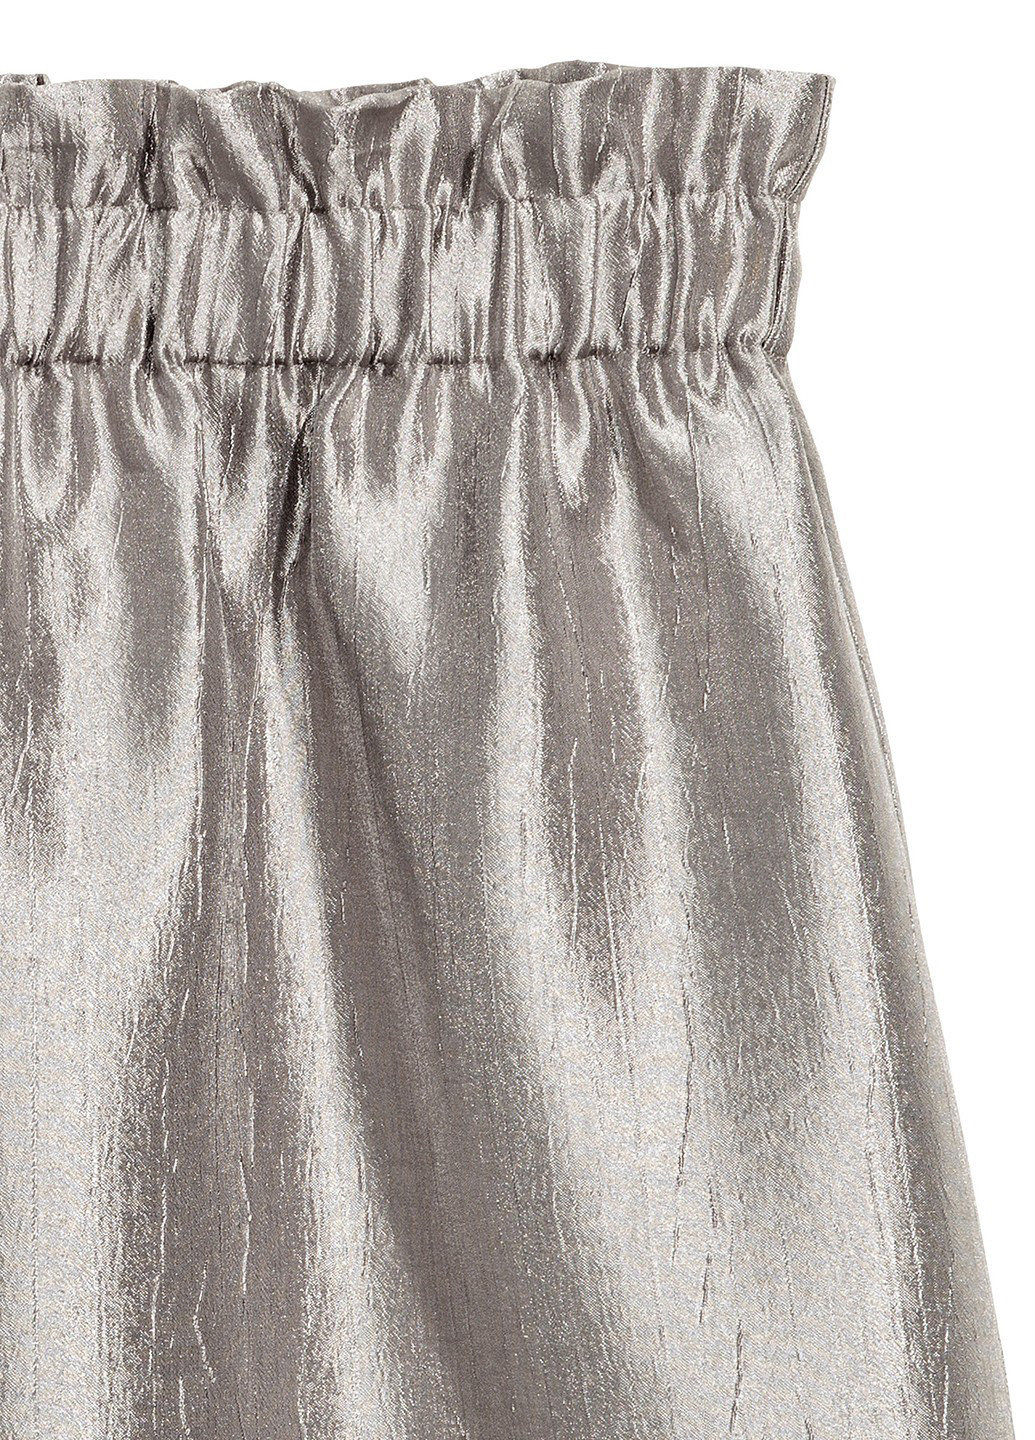 Серебристая кэжуал однотонная юбка H&M а-силуэта (трапеция)